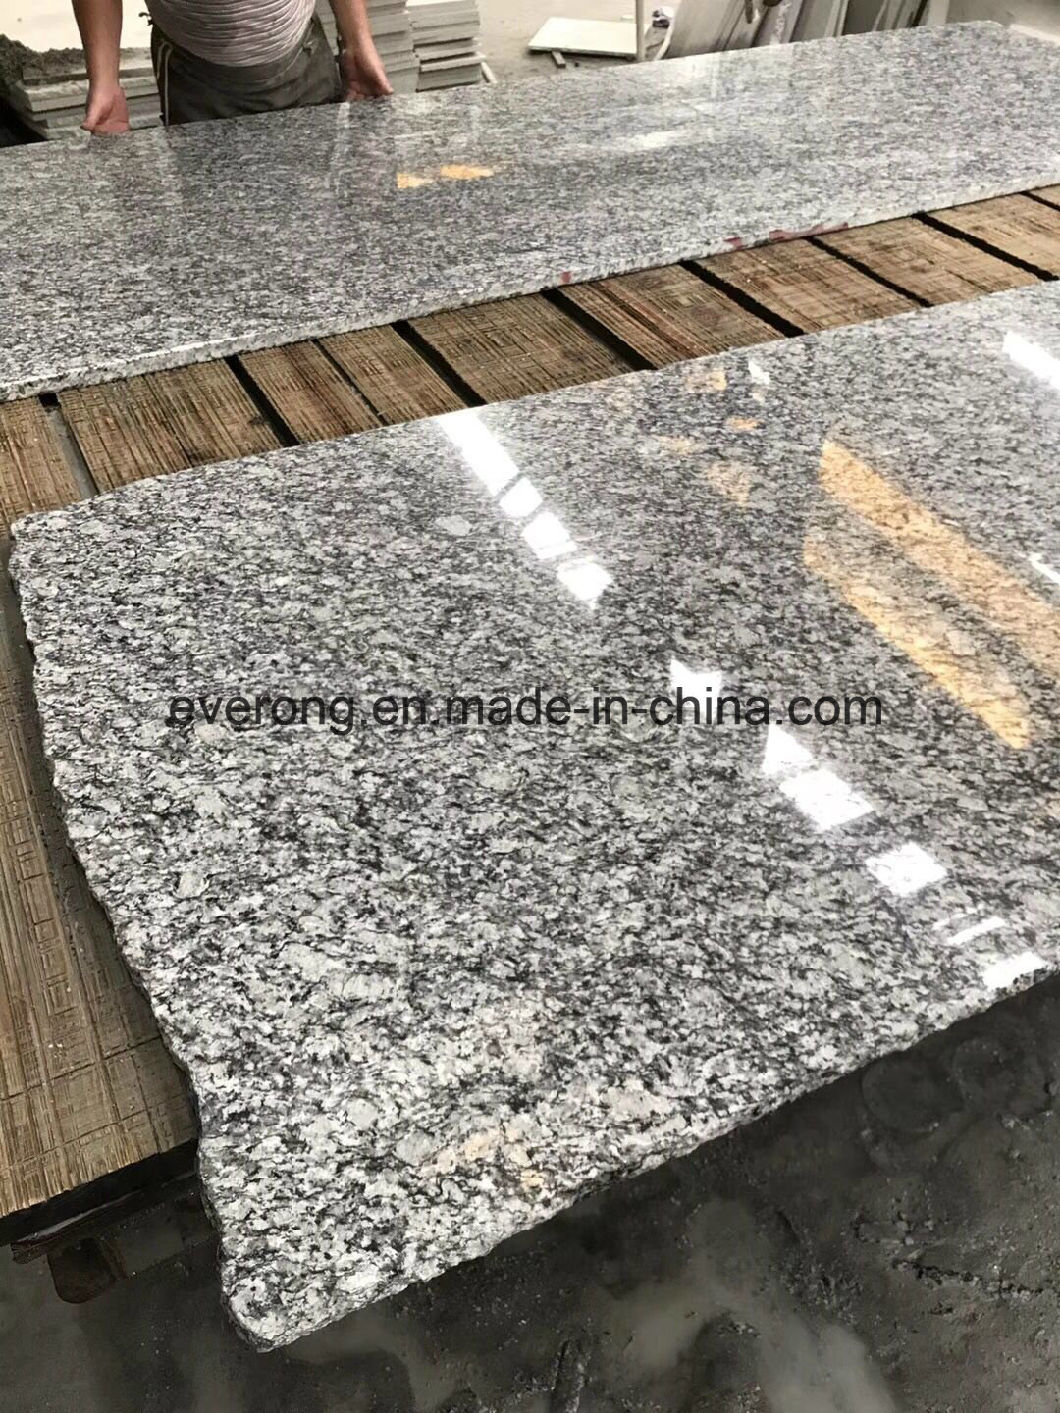 Cheap Seawave White Granite Tile, Sea Flower Granite, Spray White Granite